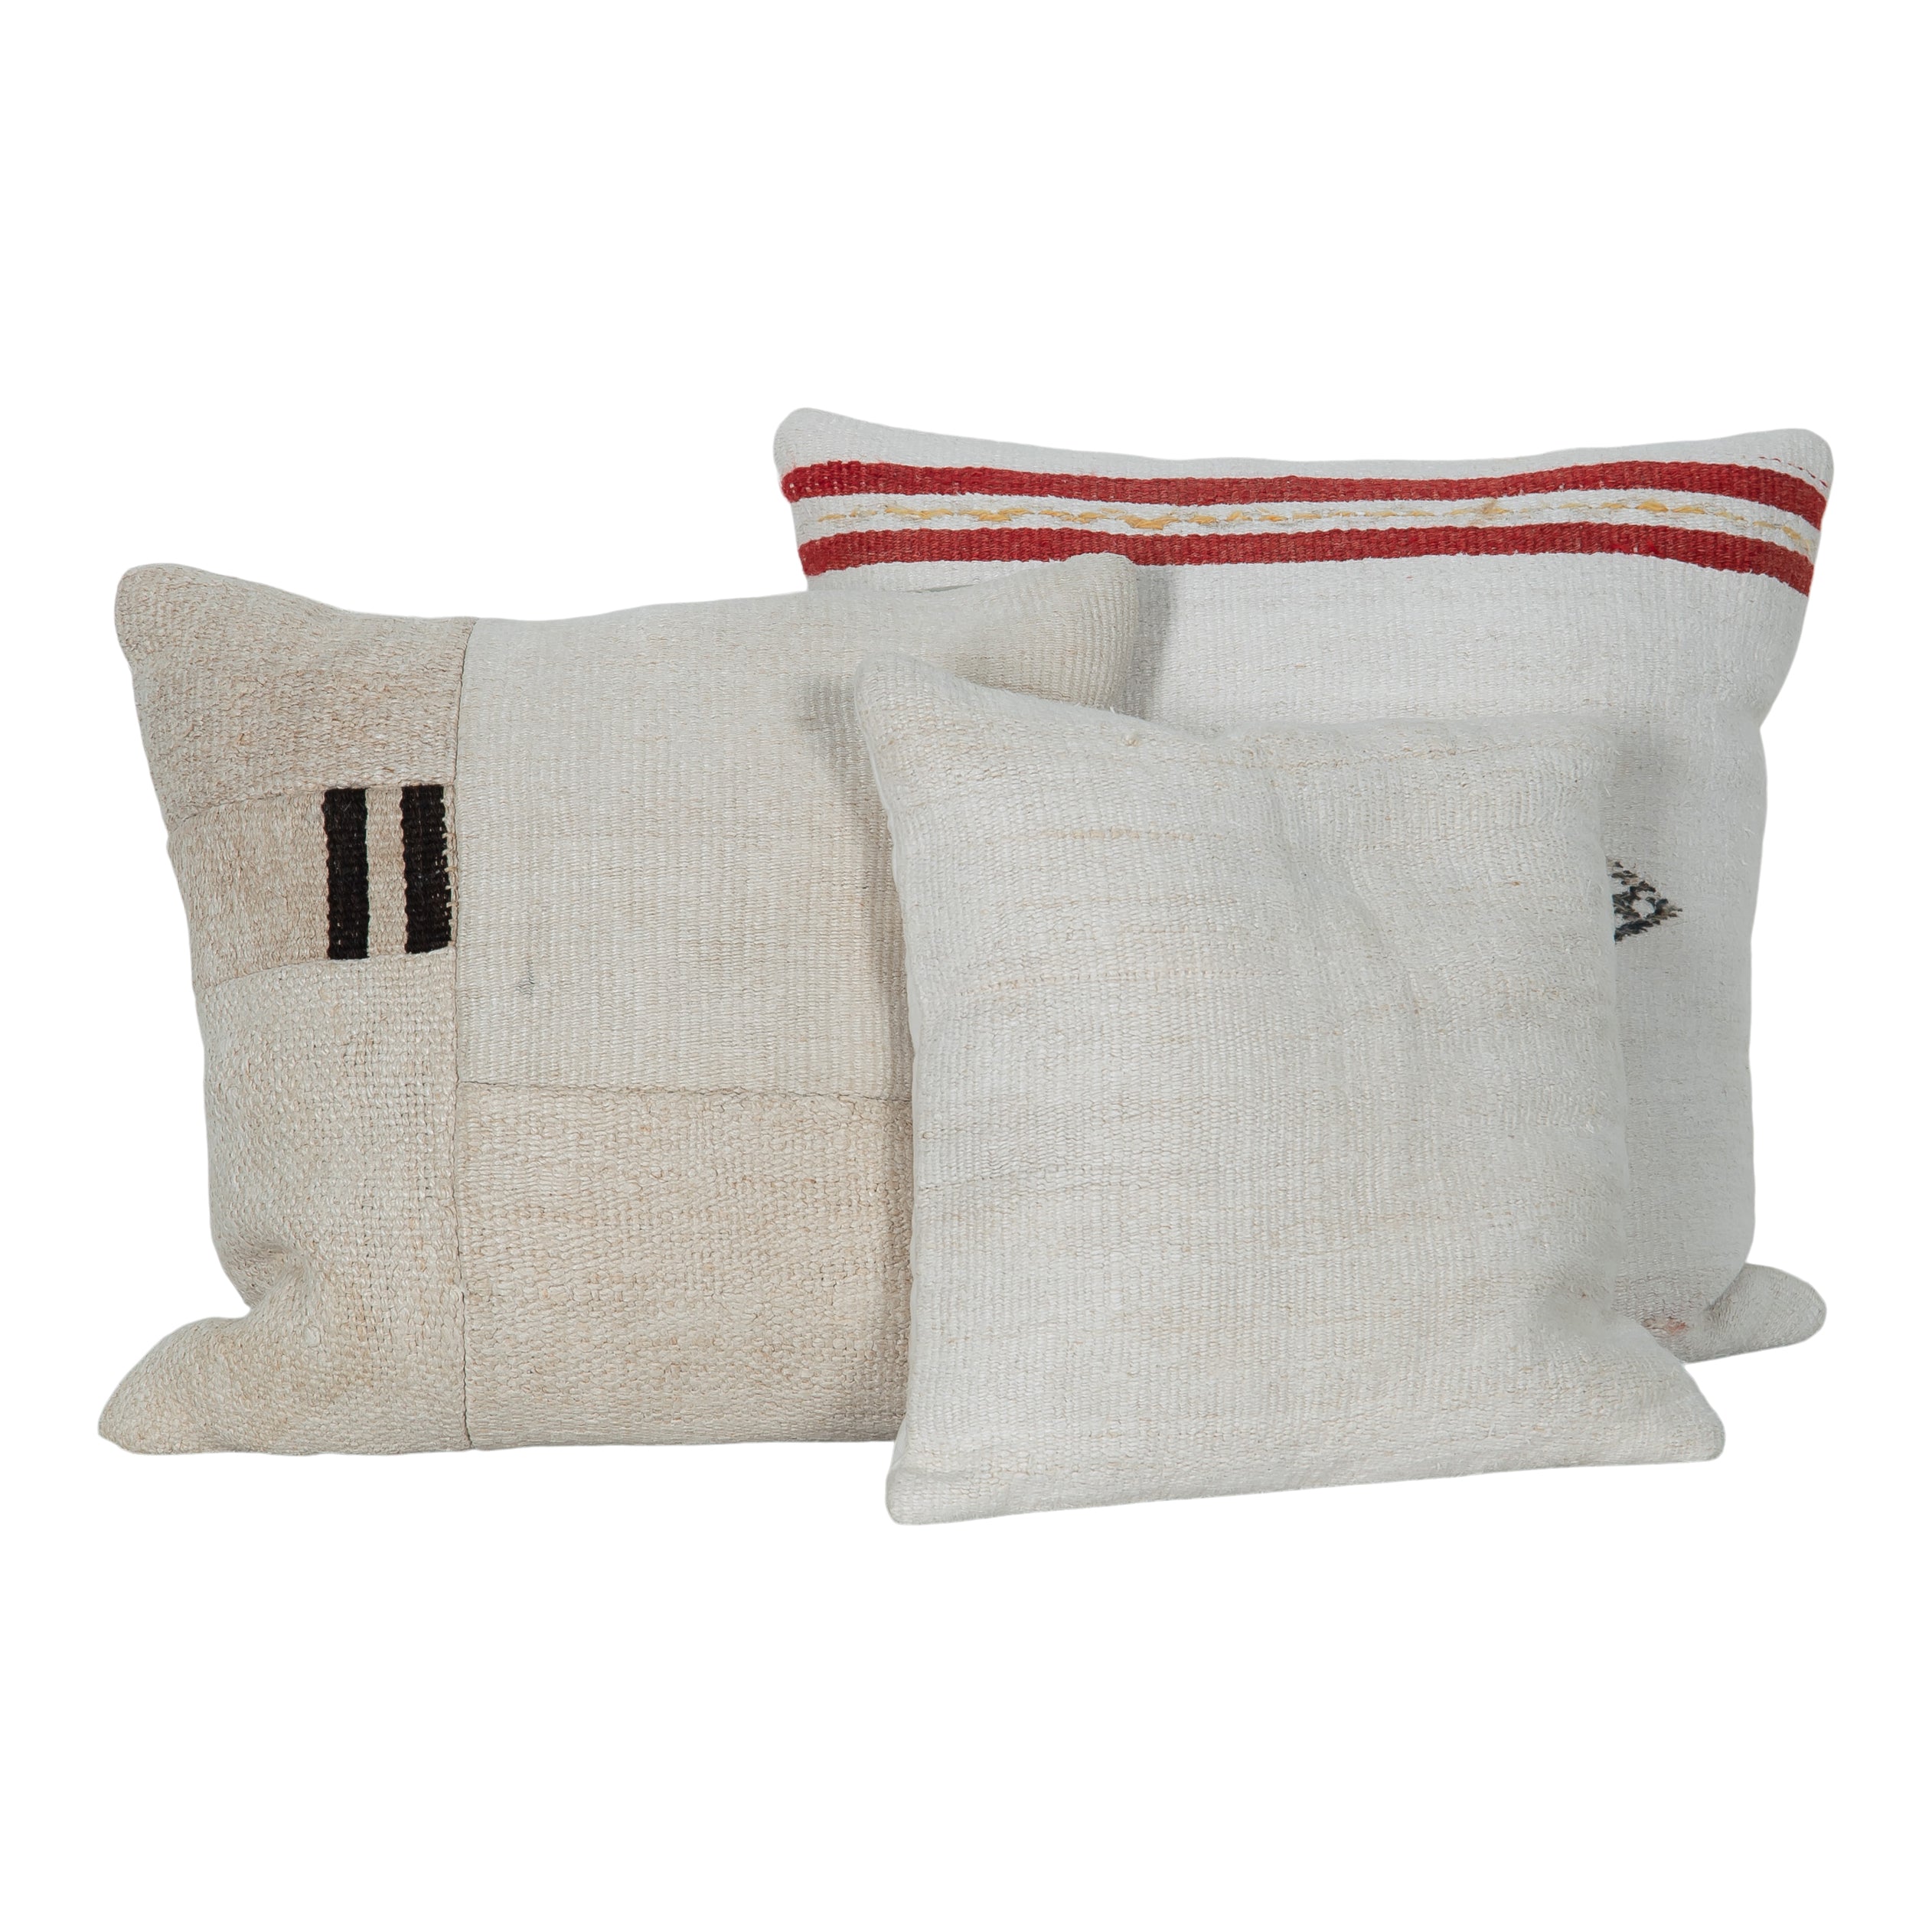 Linka Kilim Pillows (Set of 3)